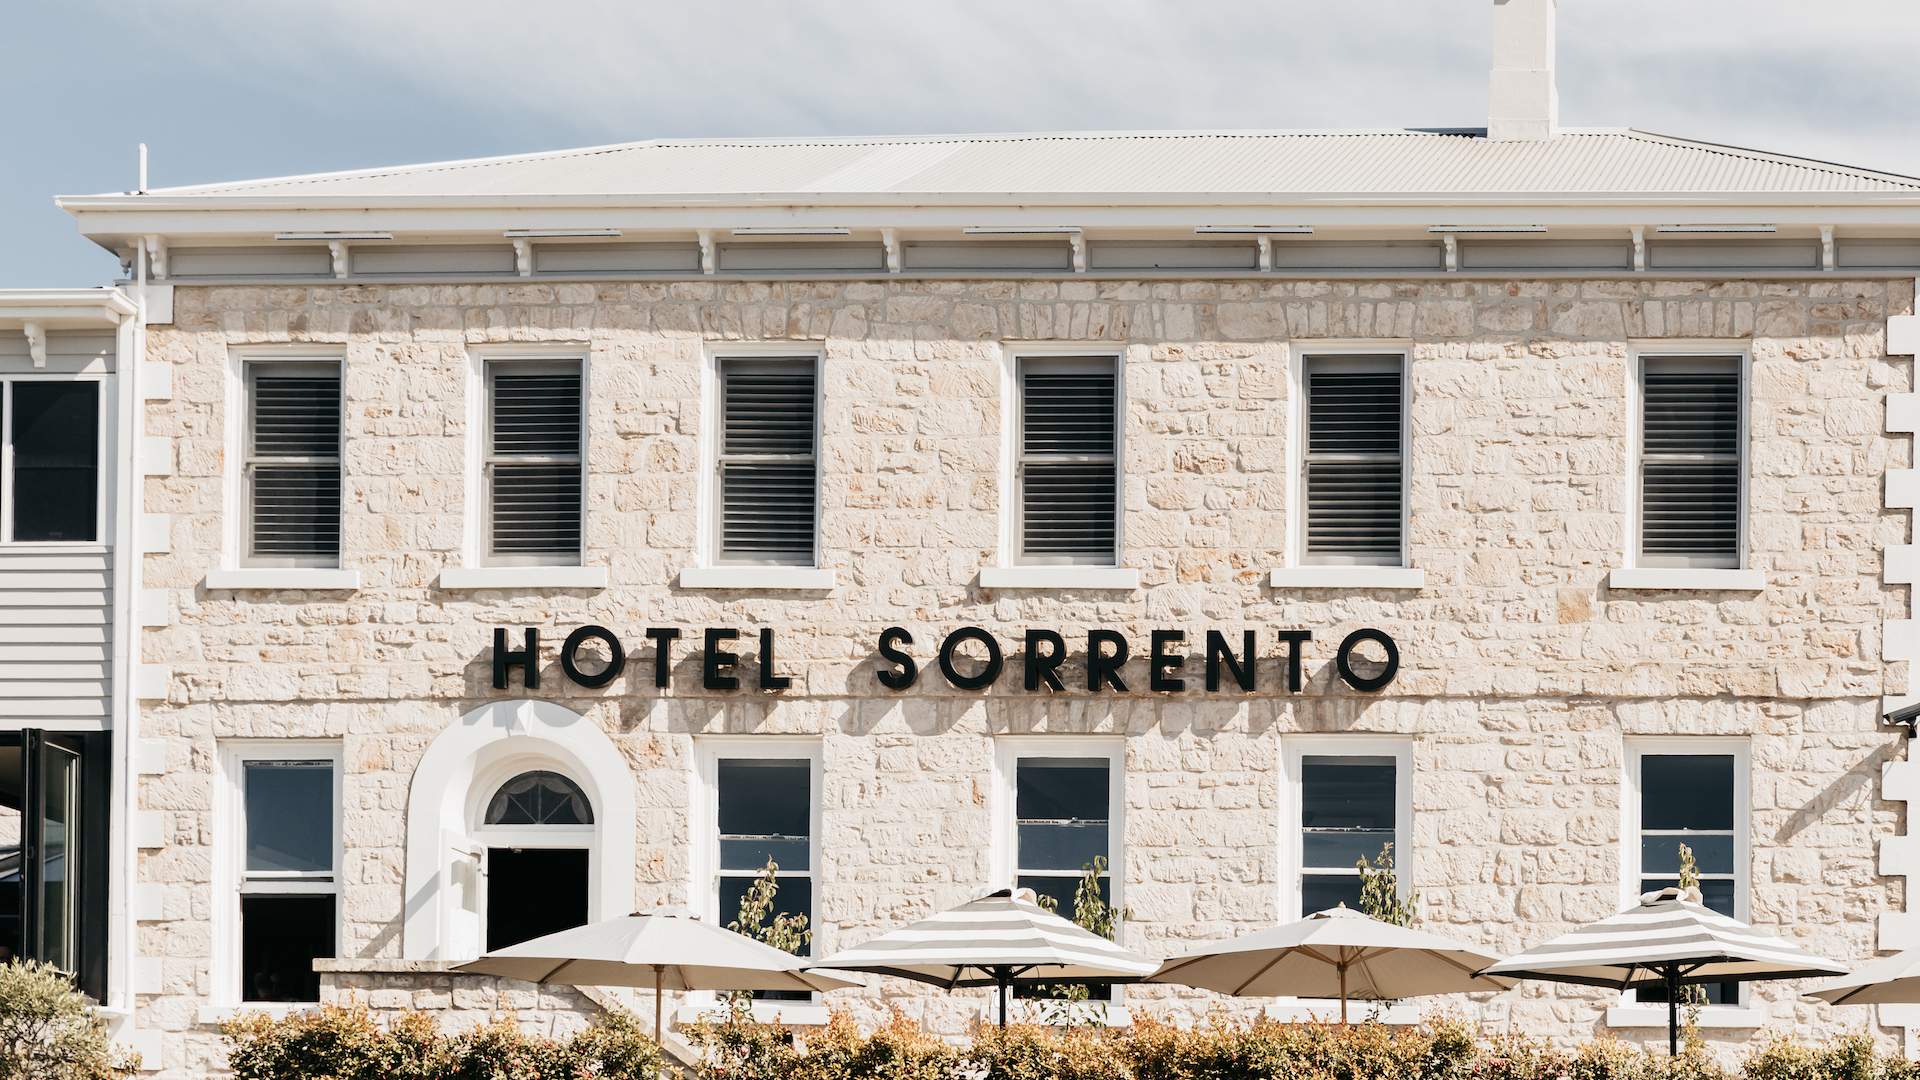 Hotel Sorrento - Mornington Peninsula